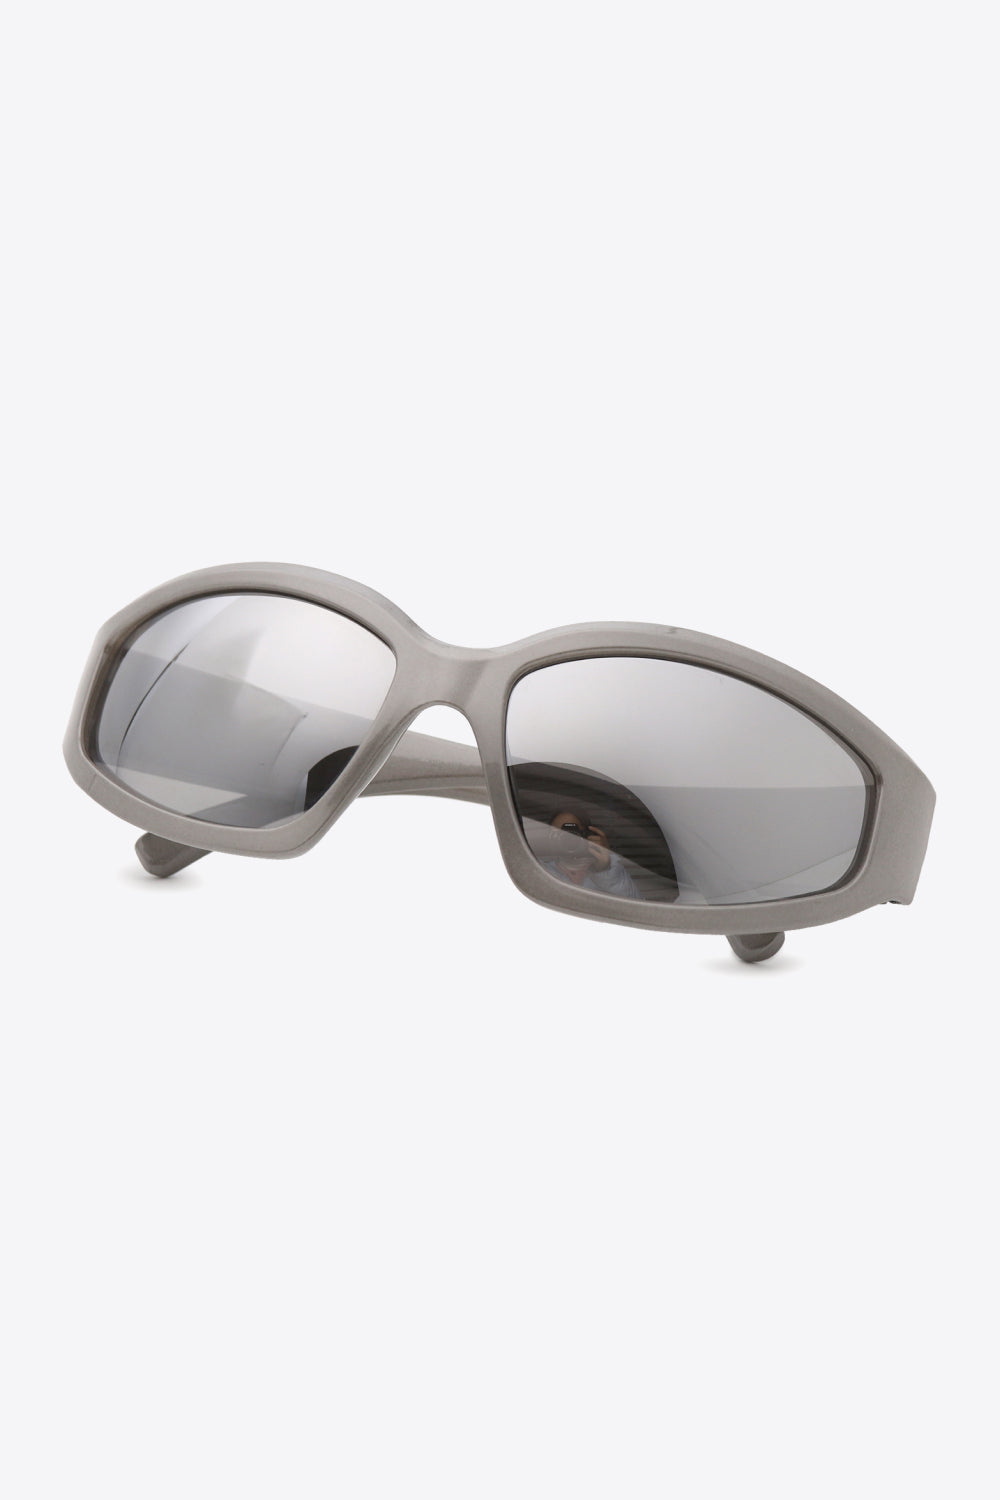 UV400 Polycarbonate Cat-Eye Sunglasses Print on any thing USA/STOD clothes